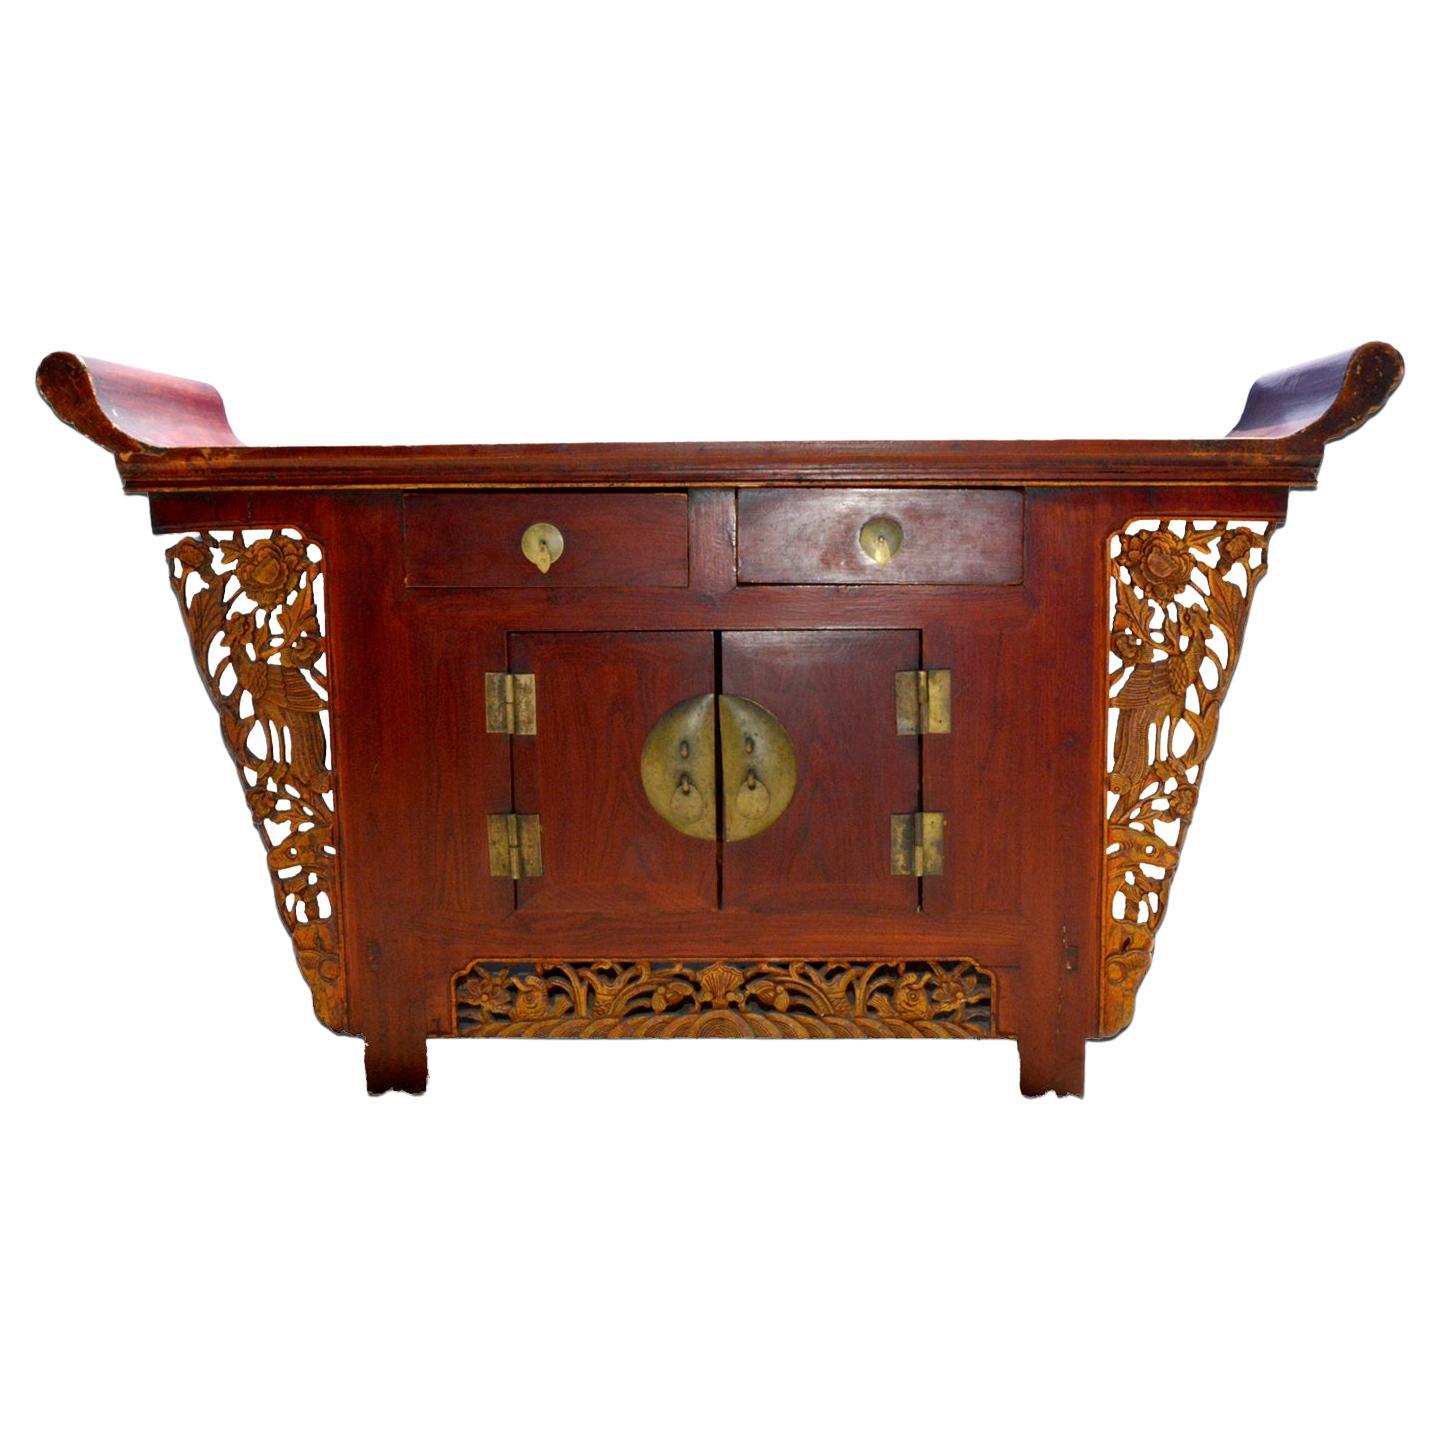 Großer antiker chinesischer rot lackierter, hochgeschnitzter Original-Koffertisch aus Hartholz